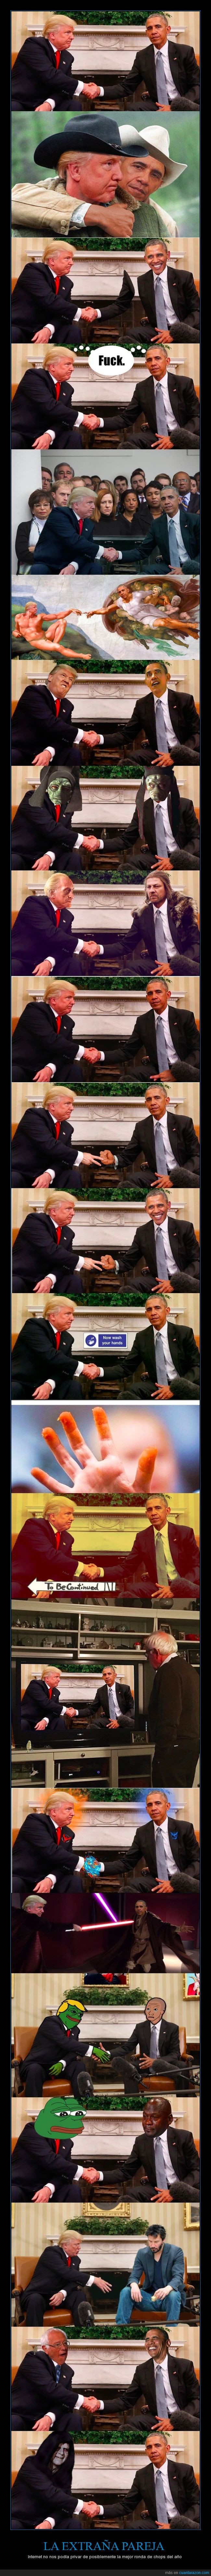 obama,trump,chops,saludo,manos,photoshop